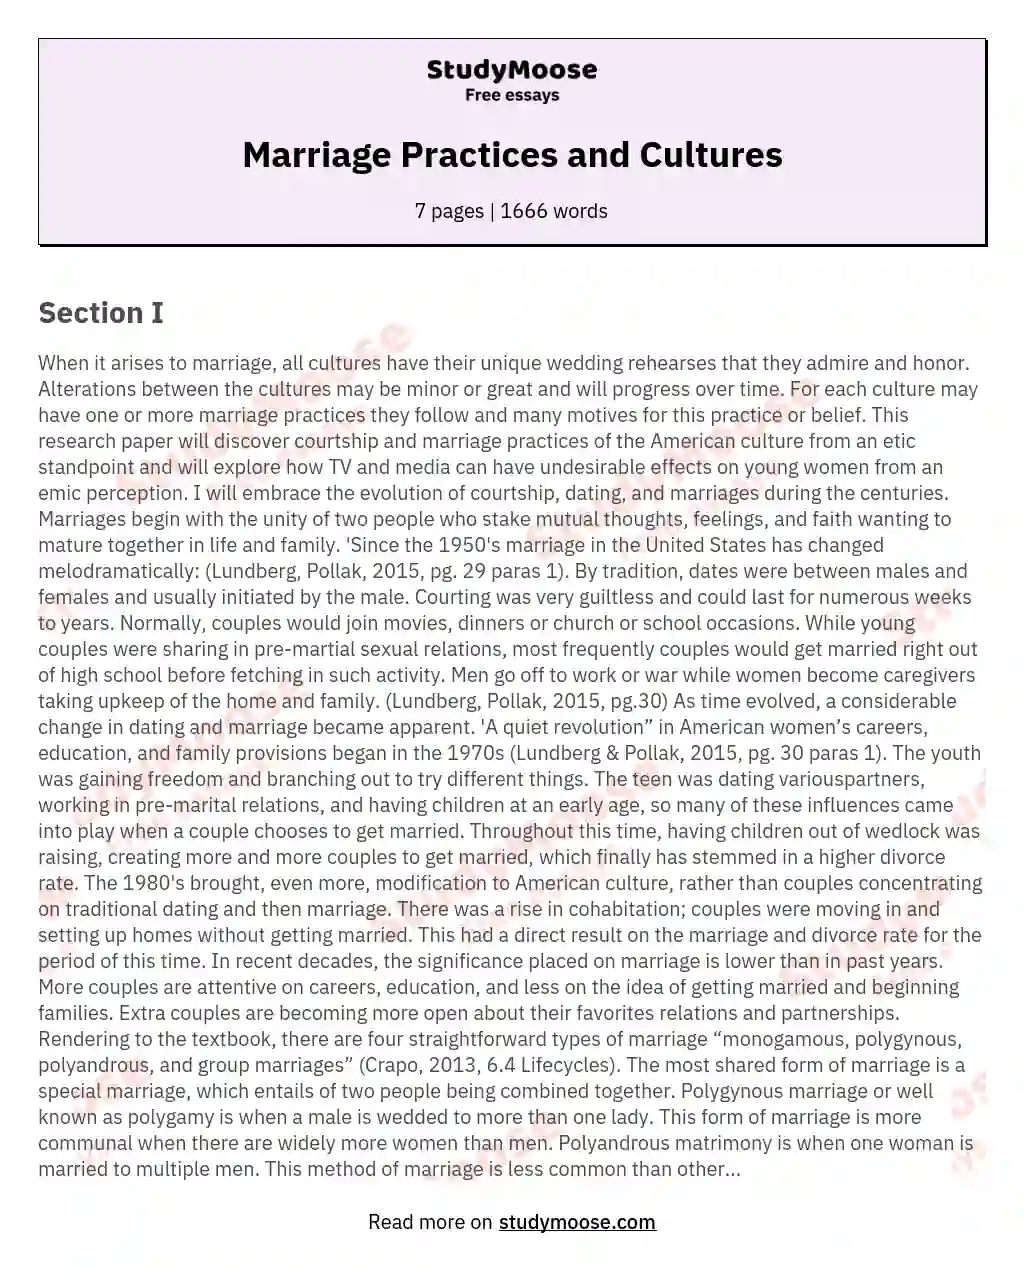 mixed marriages act essay topics